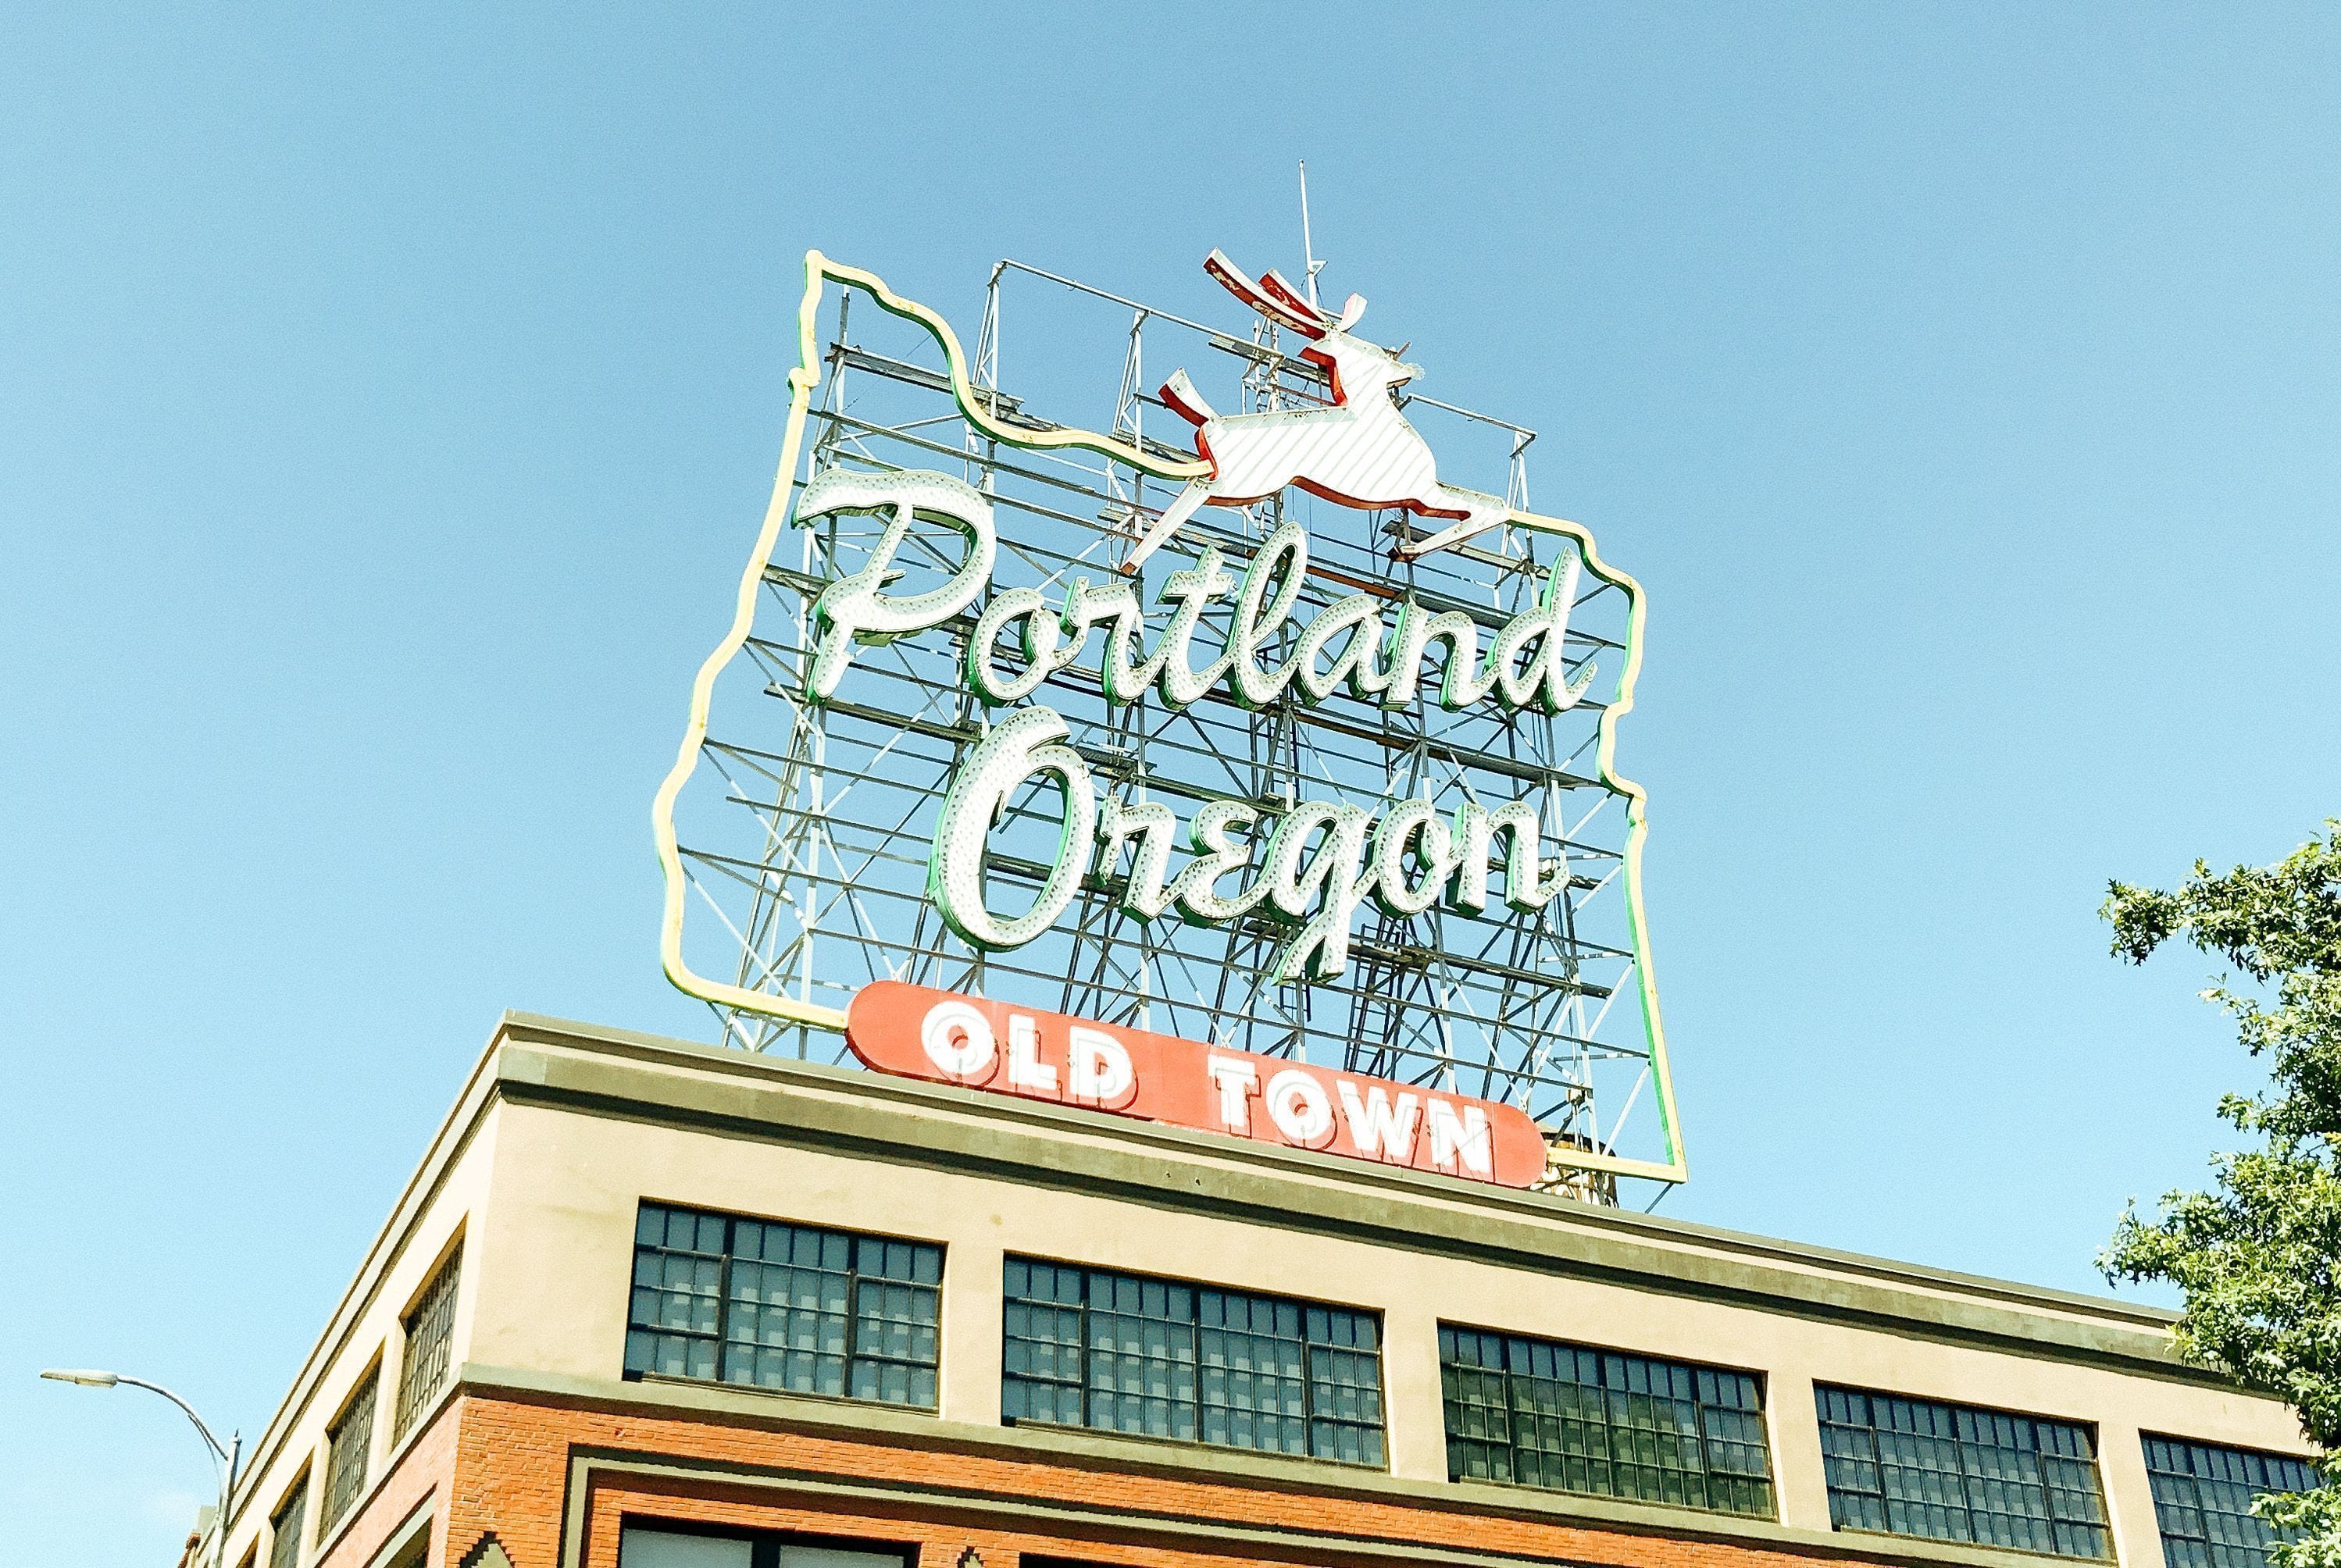 City Bike Tour: 6 Bikeable Spots to Visit in Portland